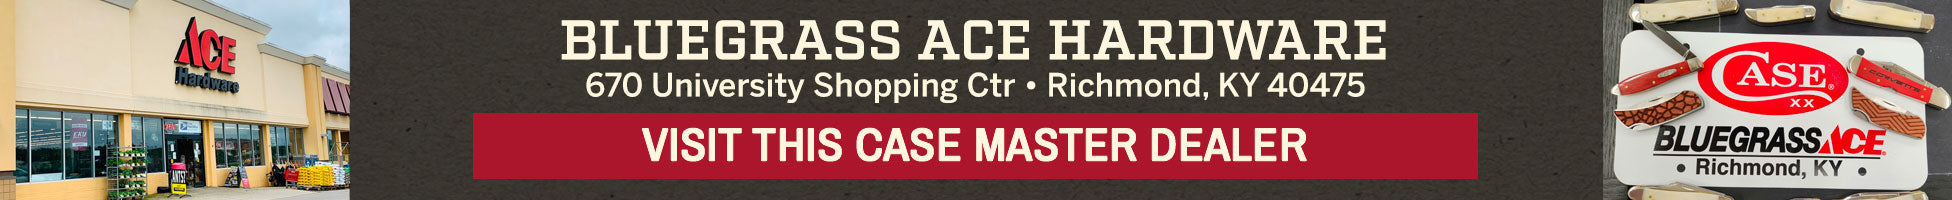 Bluegrass Ace Hardware - Dealer Spotlight